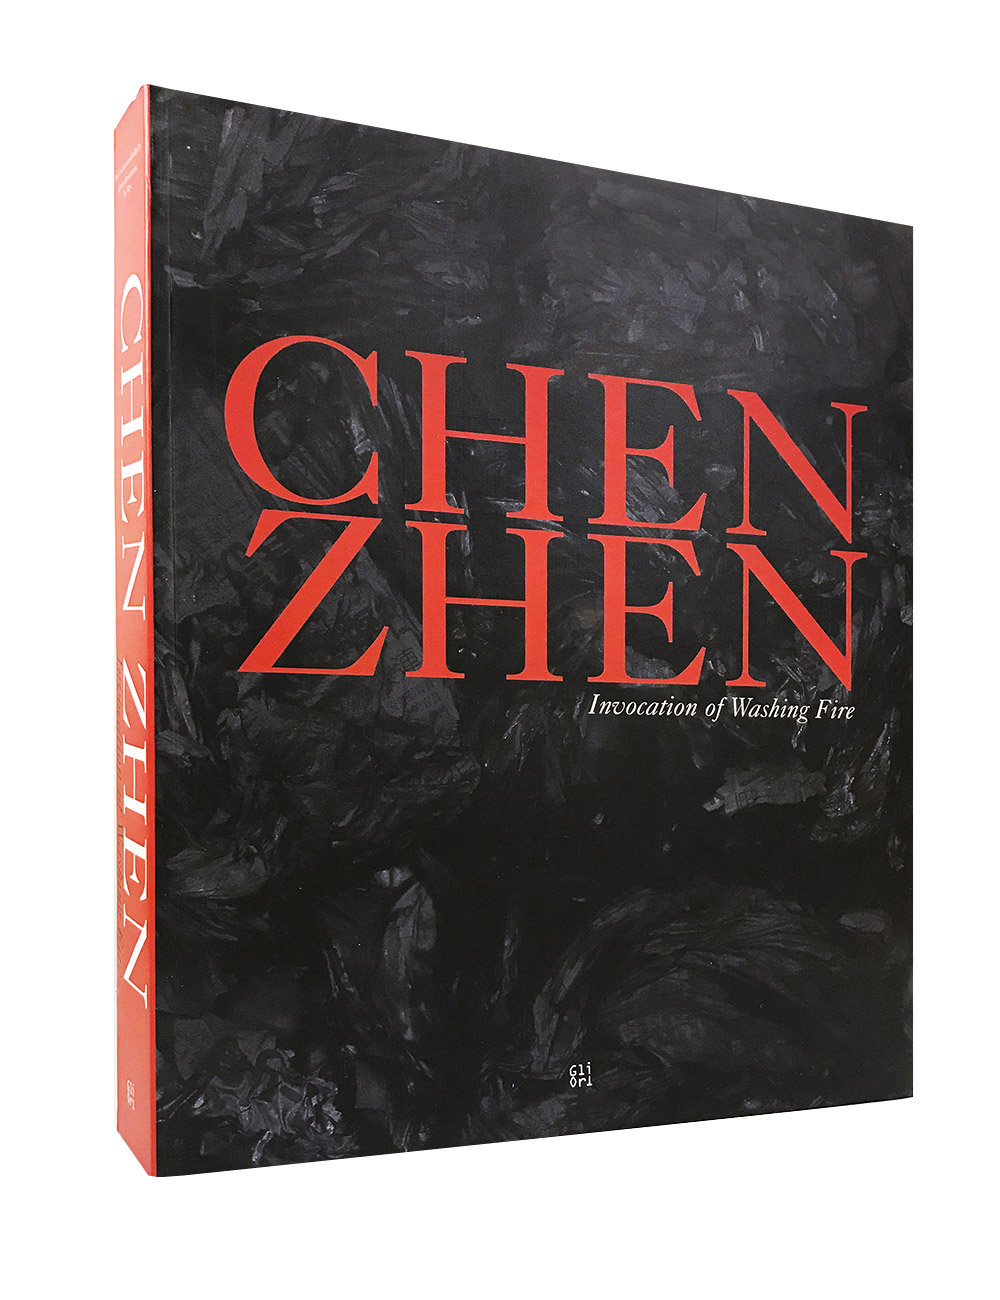 CHEN ZHEN. Invocation of Washing Fire, 2003